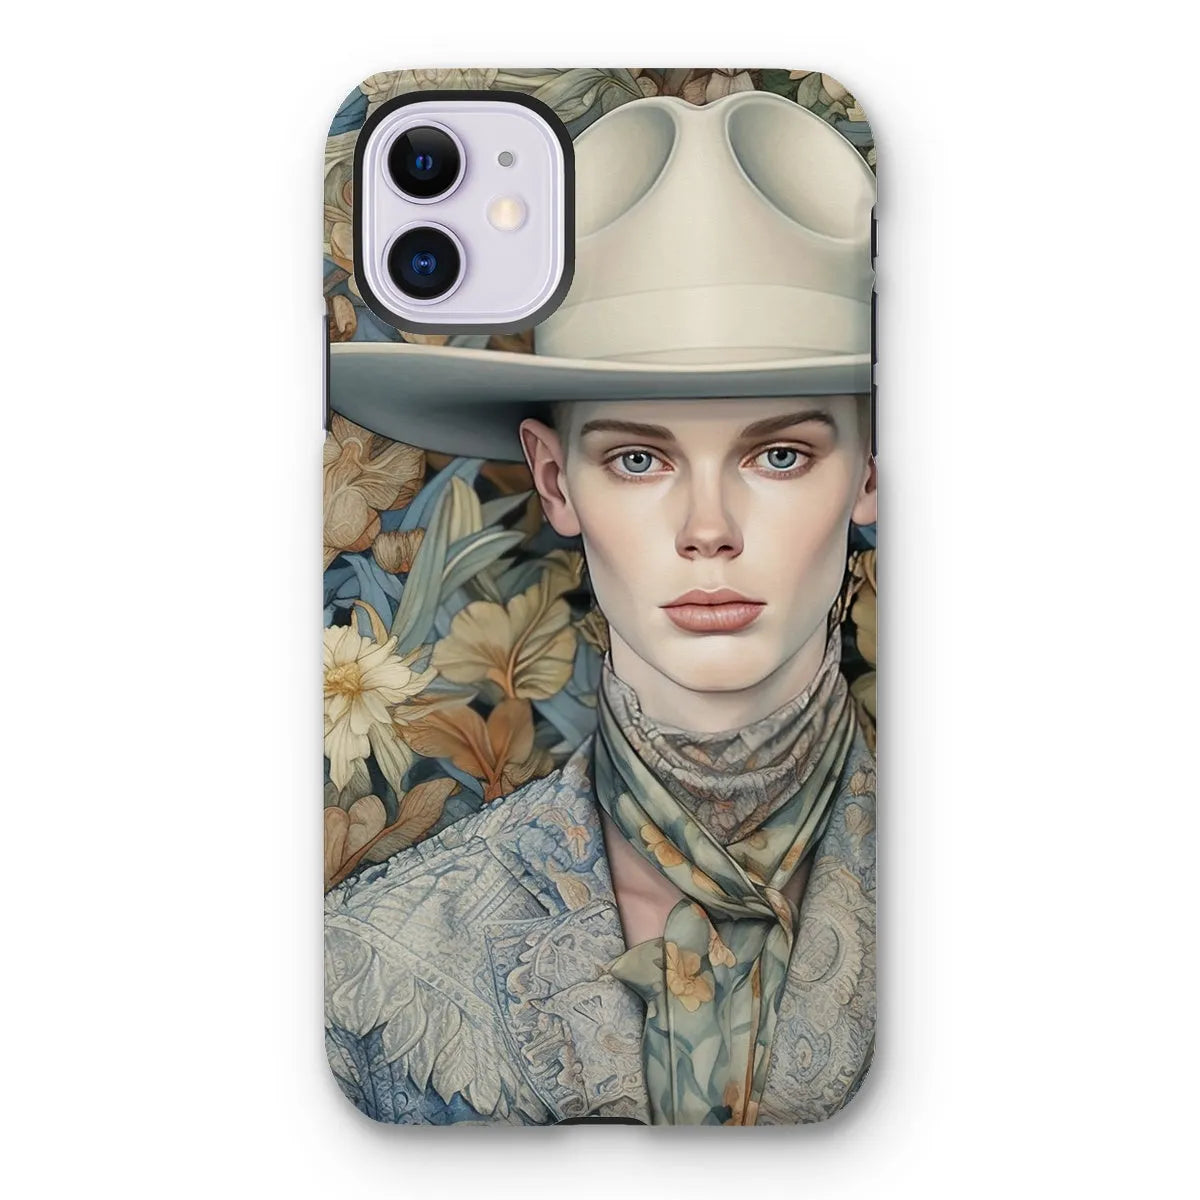 Jasper - Dandy Twink Cowboy Aesthetic Art Phone Case - Iphone 11 / Matte - Mobile Phone Cases - Aesthetic Art